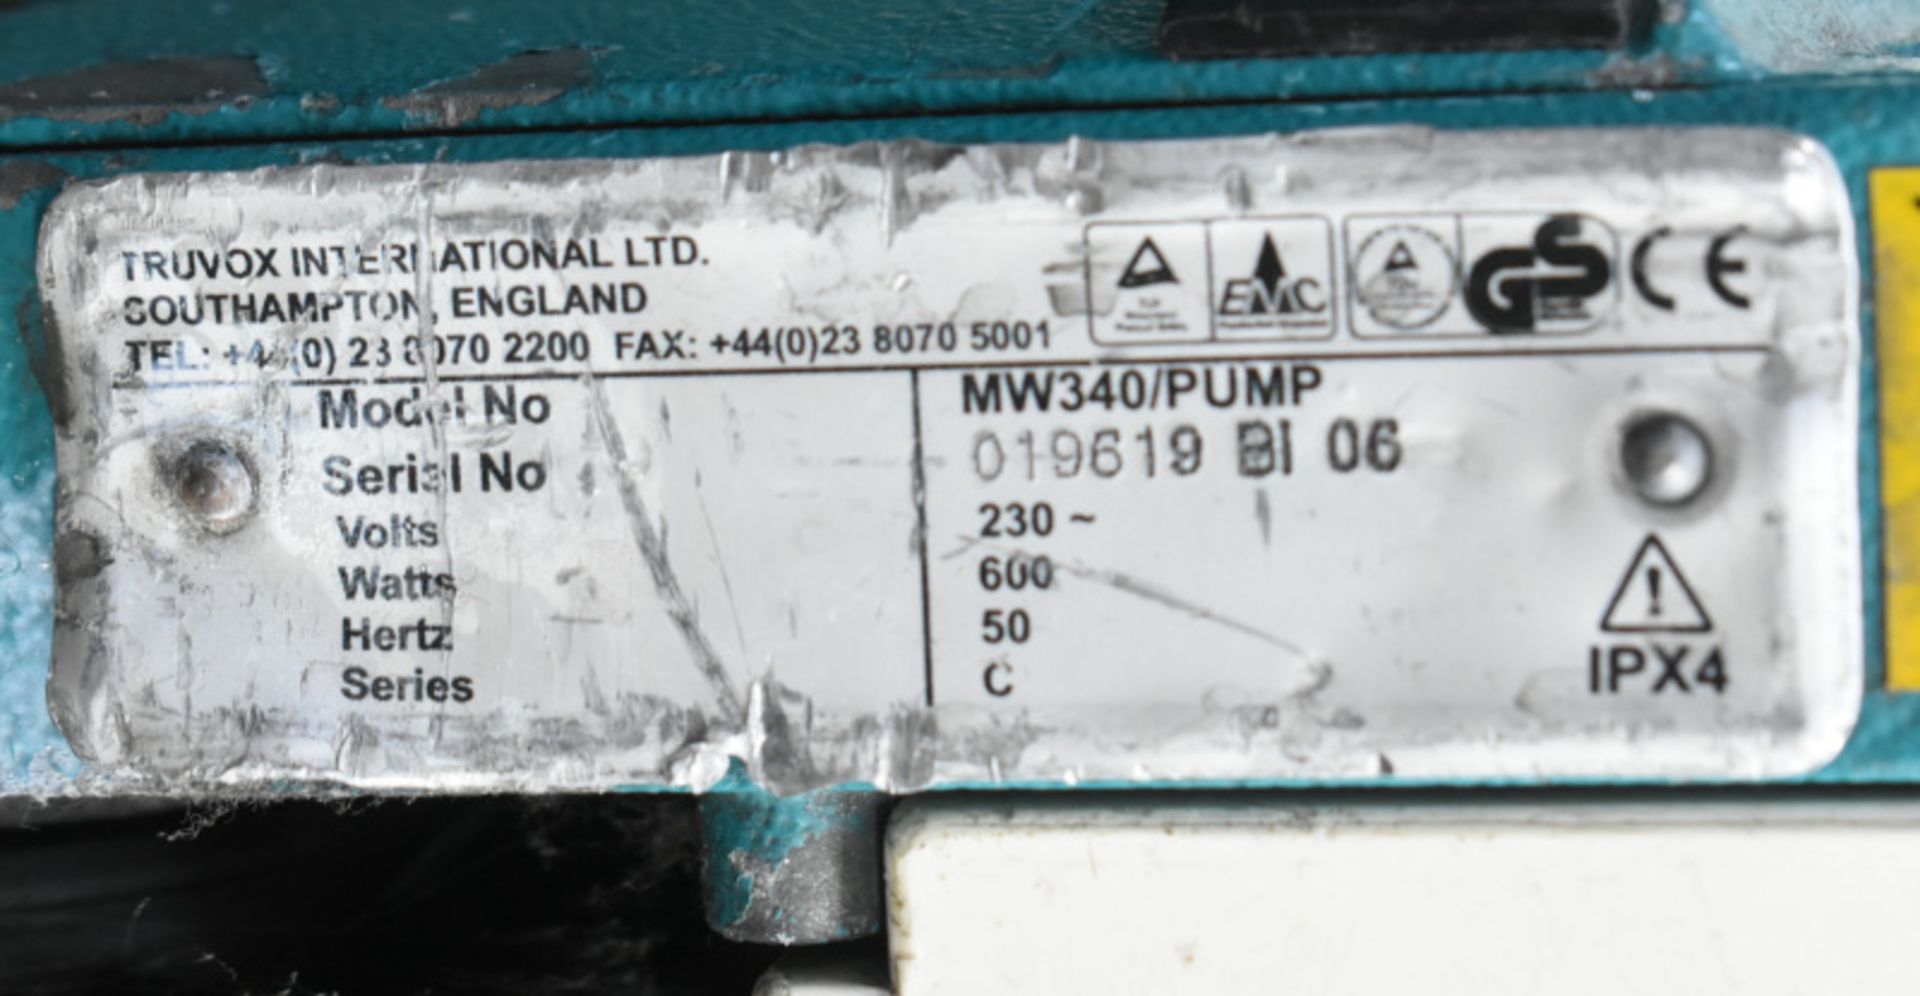 2 x Truvox Multiwash Floor Scrubber Dryer, Model- MW340/Pump - Image 6 of 6